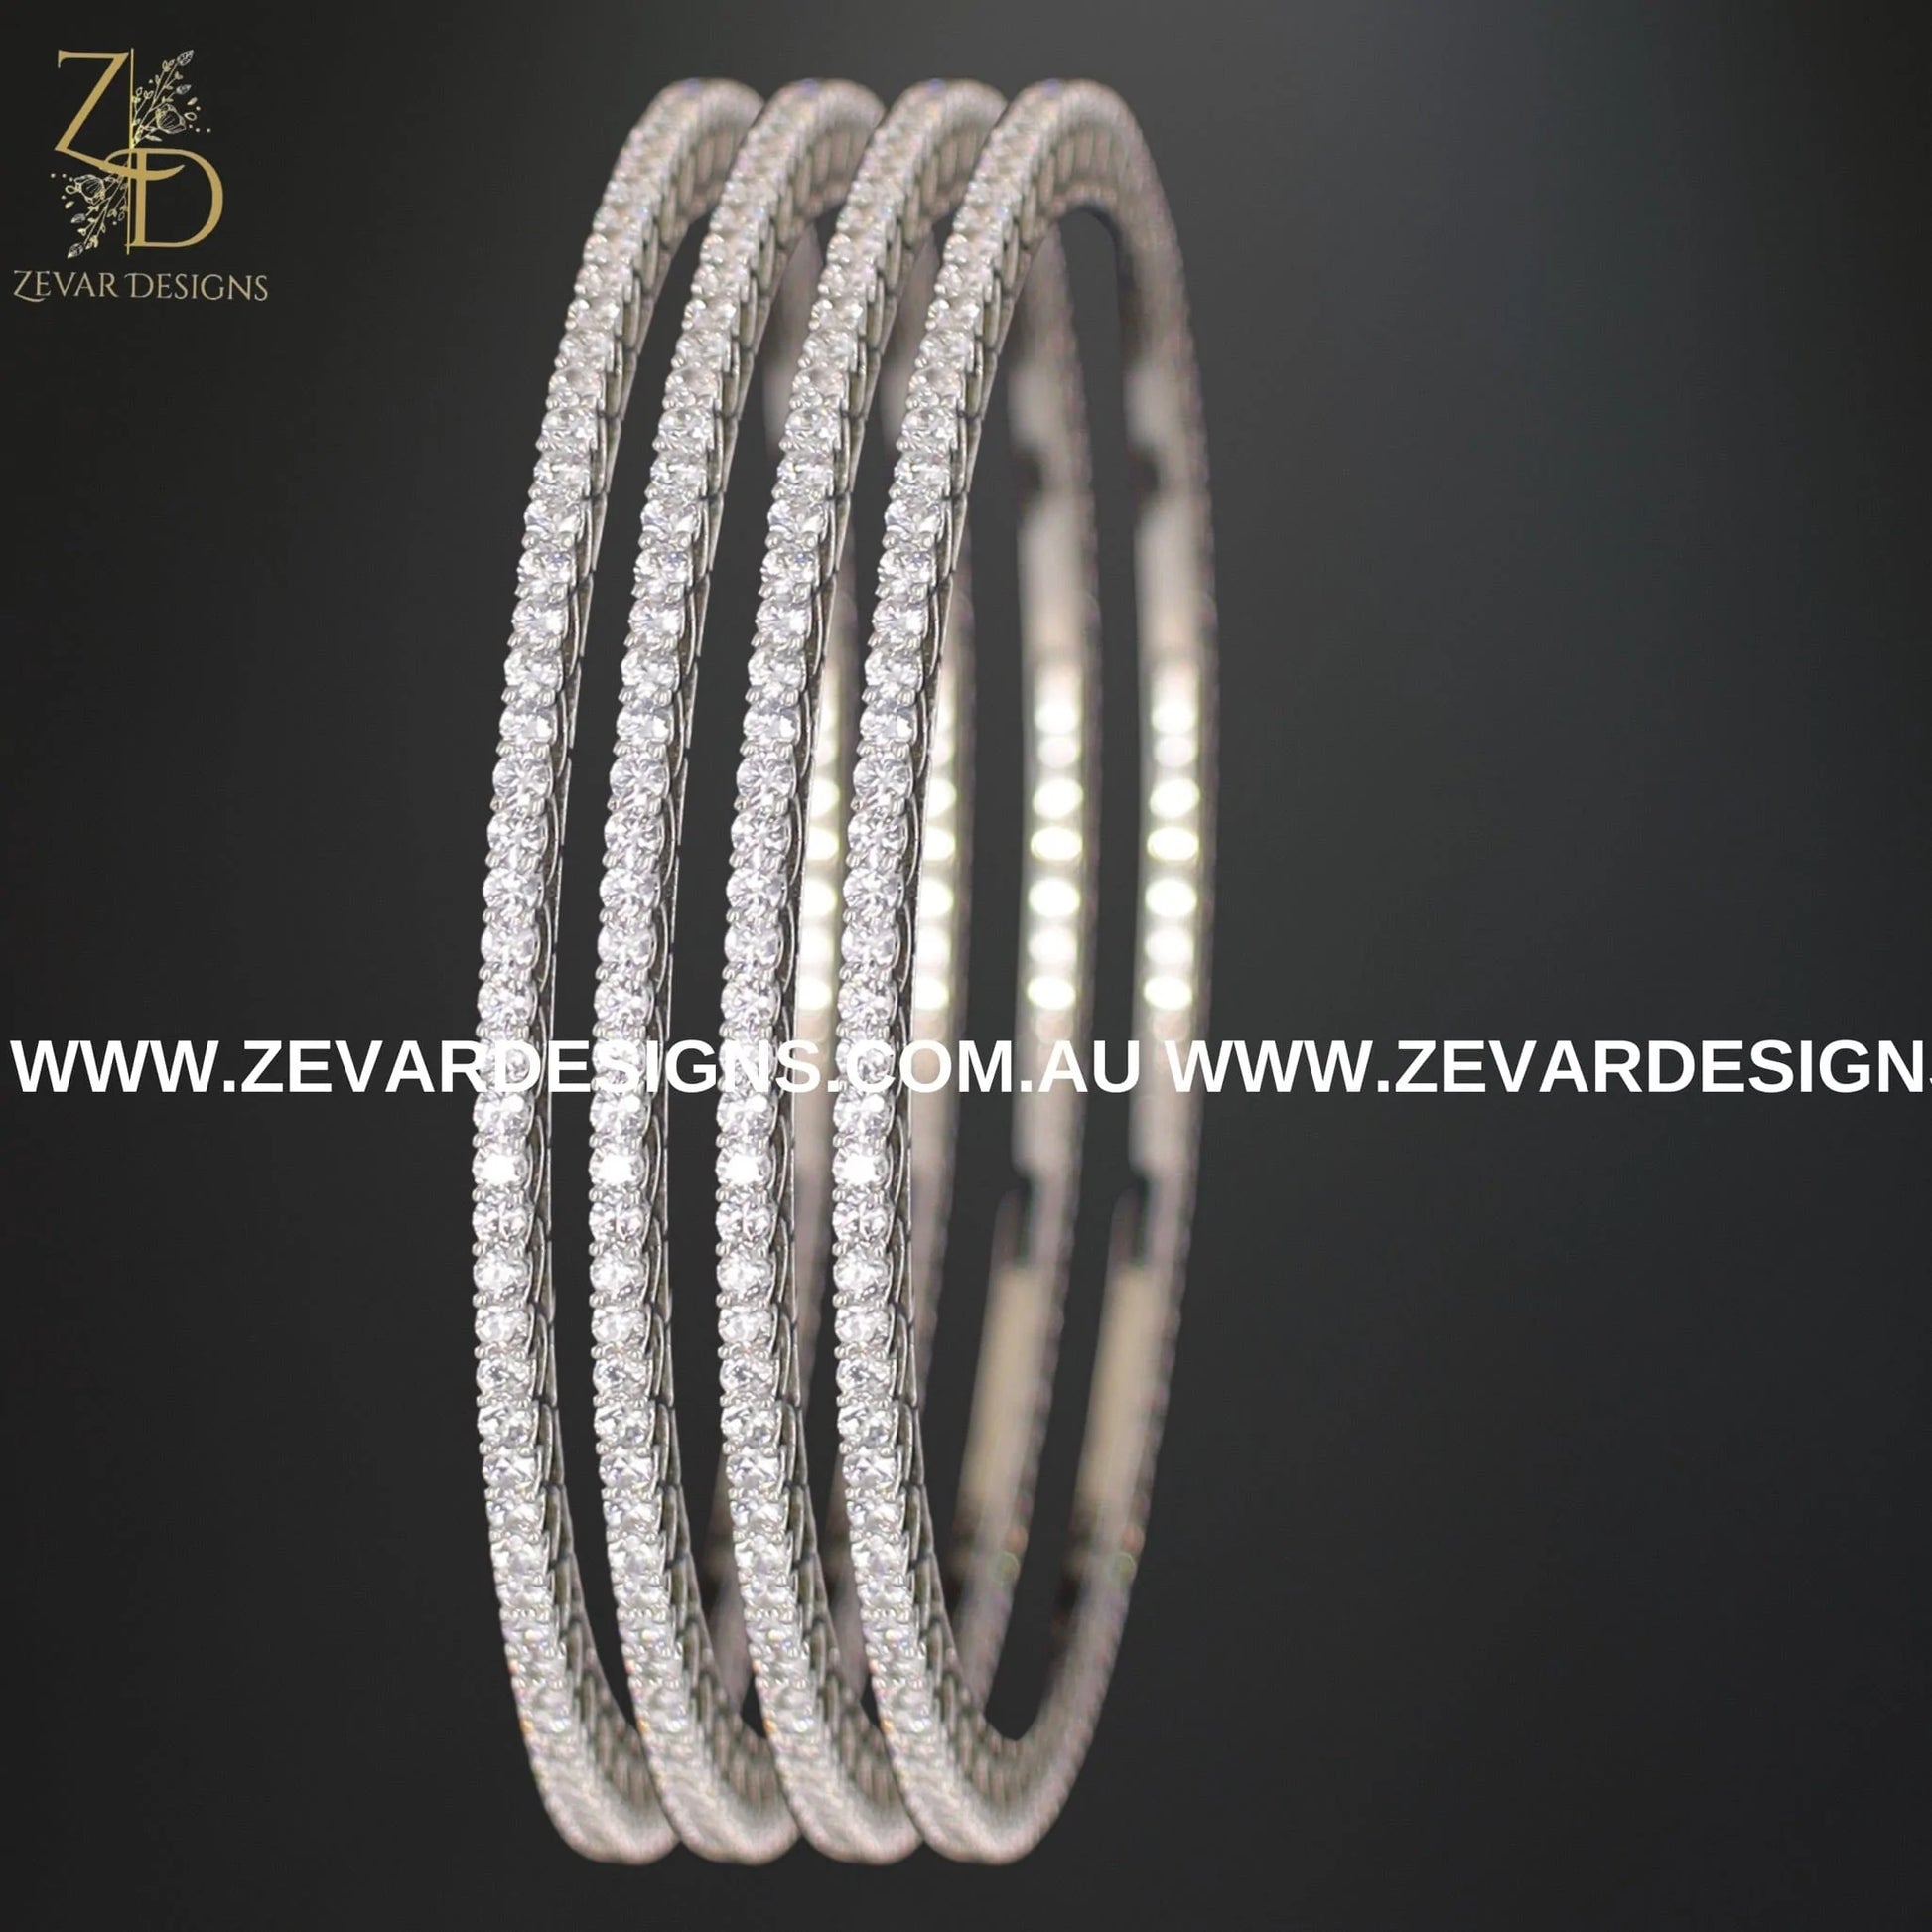 Zevar Designs Bangles & Bracelets - AD AD Single Line Bangles in White Rhodium